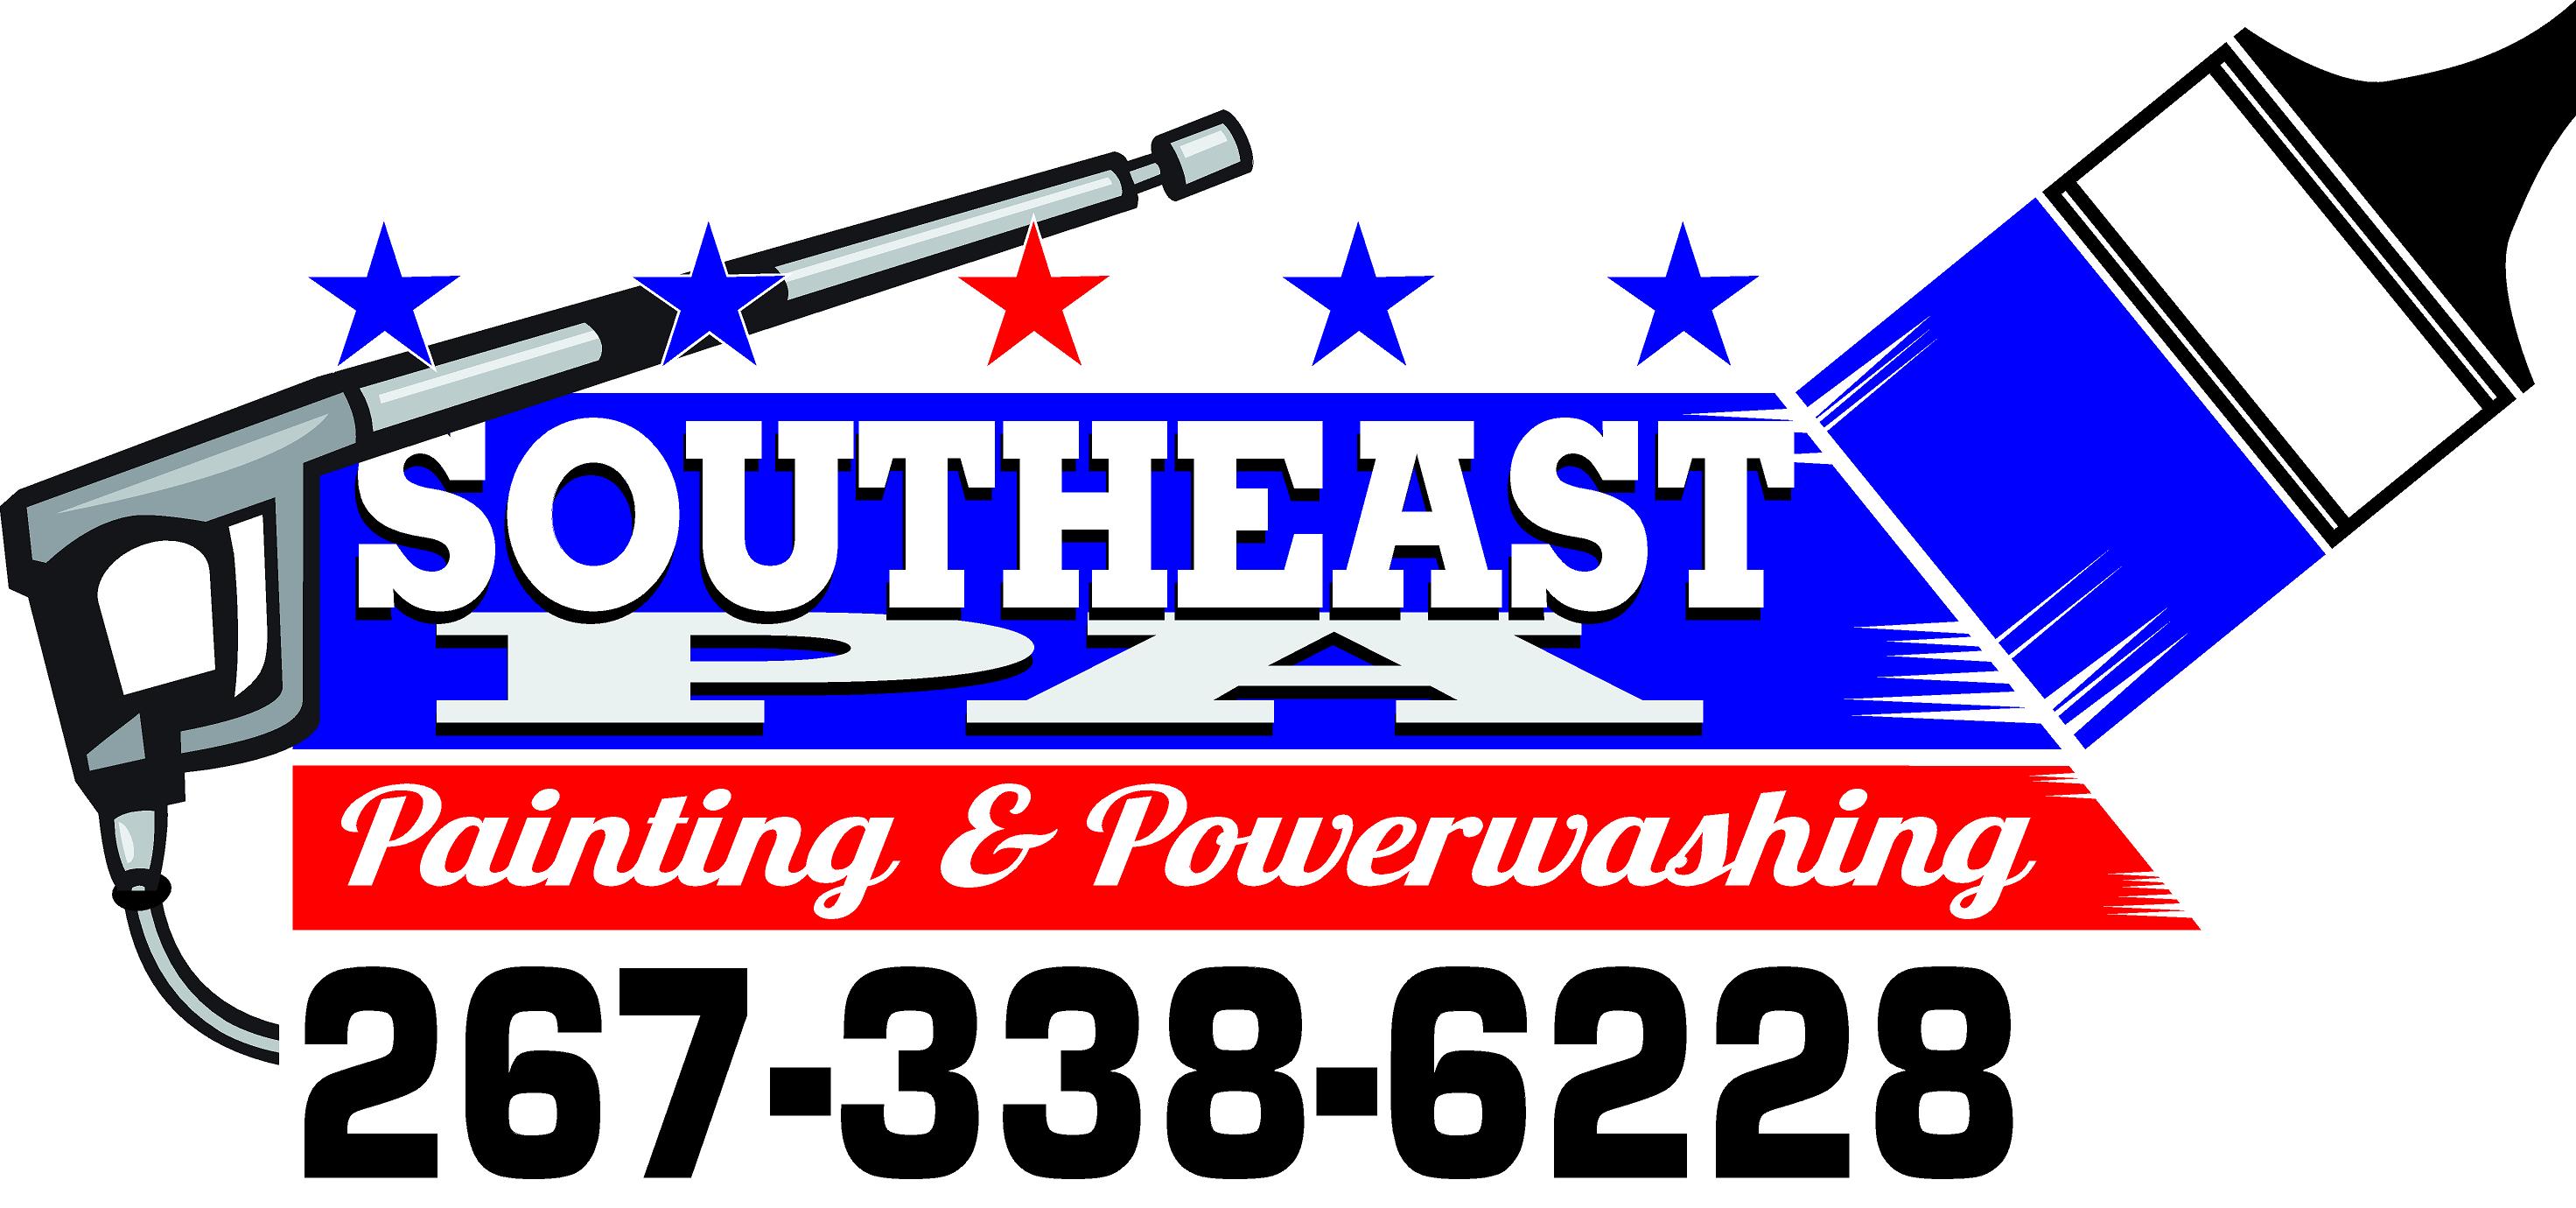 Southeast PA Painting and Powerwashing Service, LLC Logo